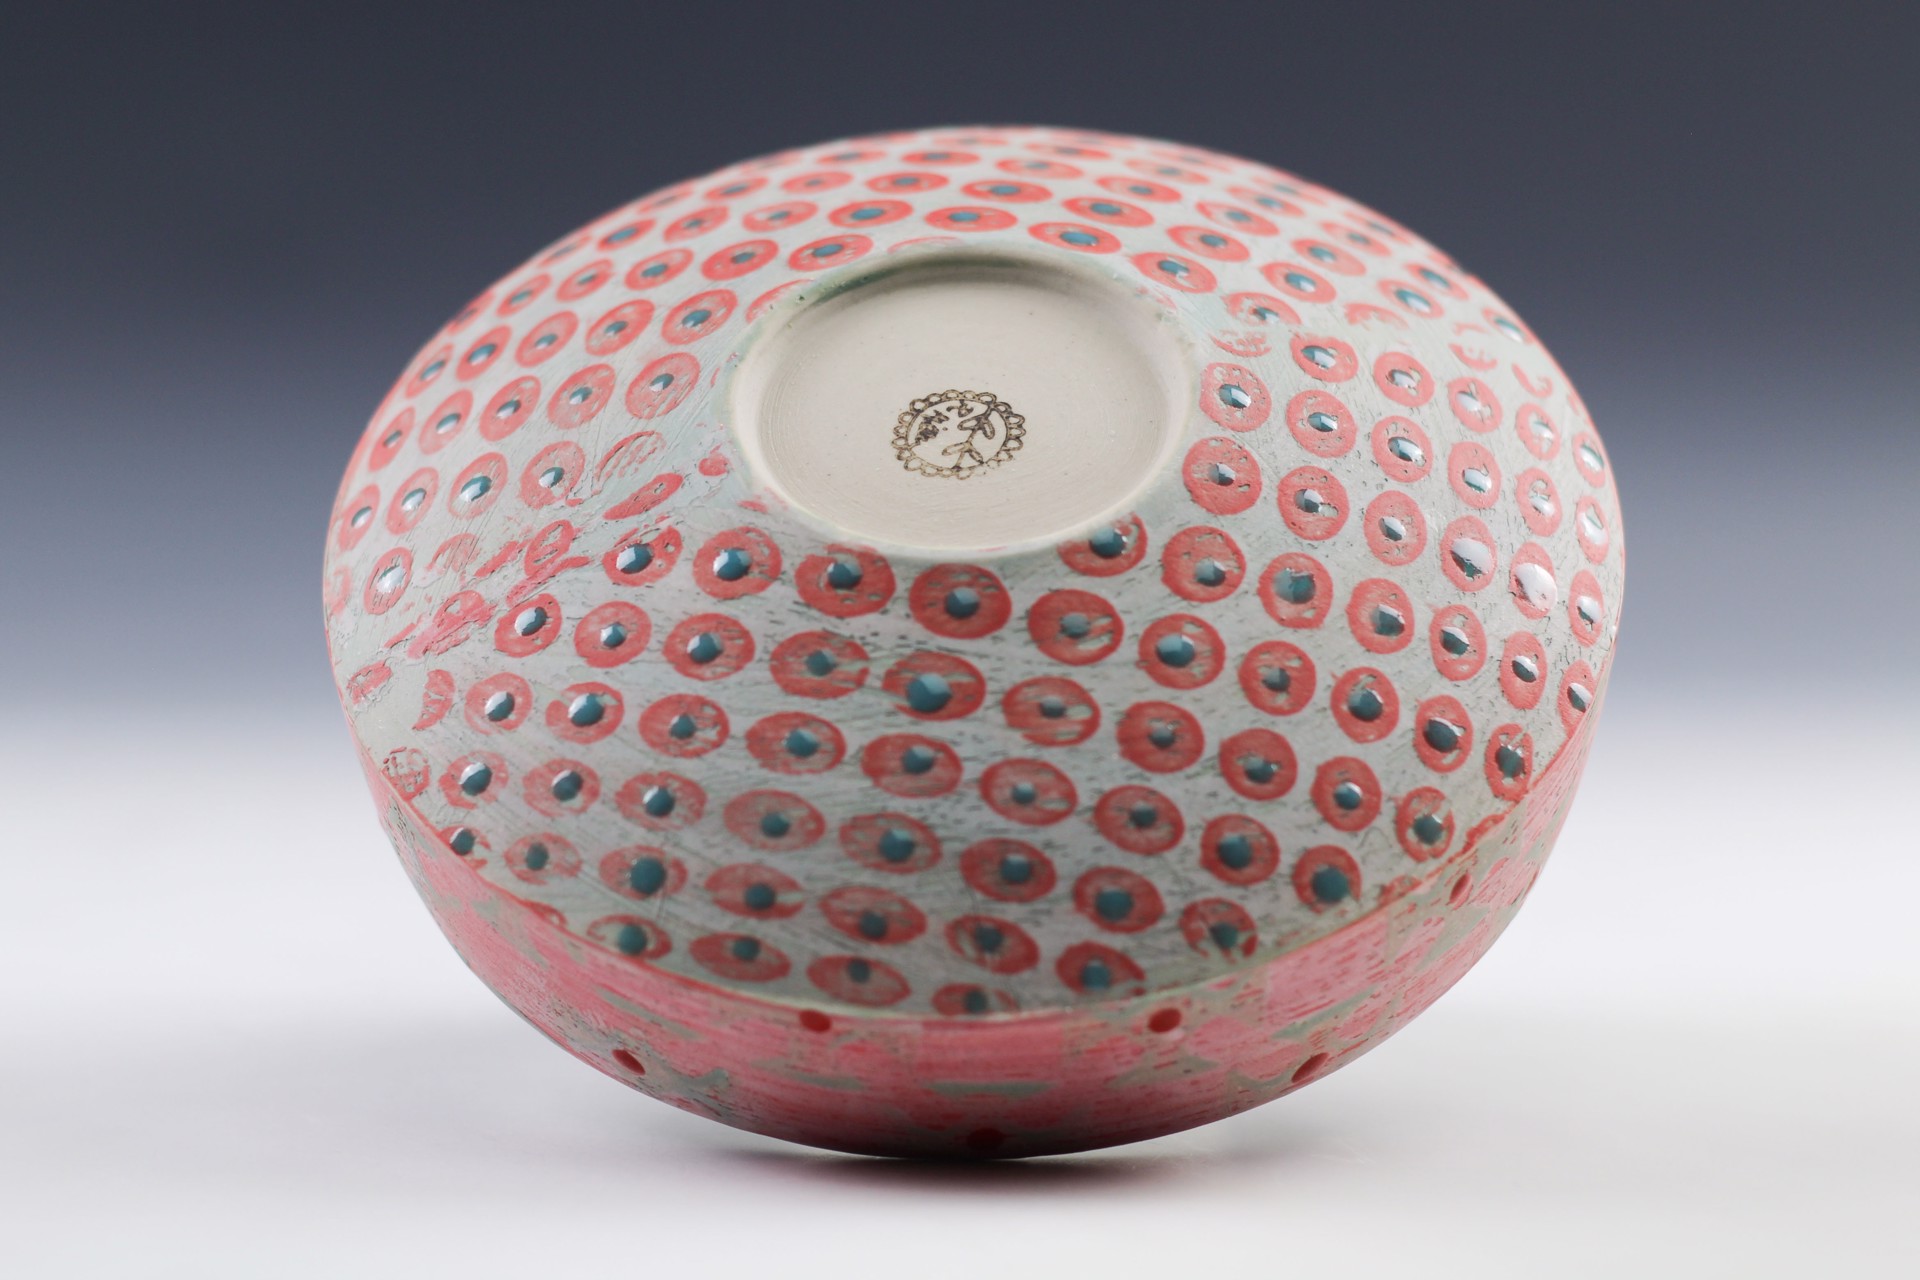 Medium Bowl by Rachelle Miller